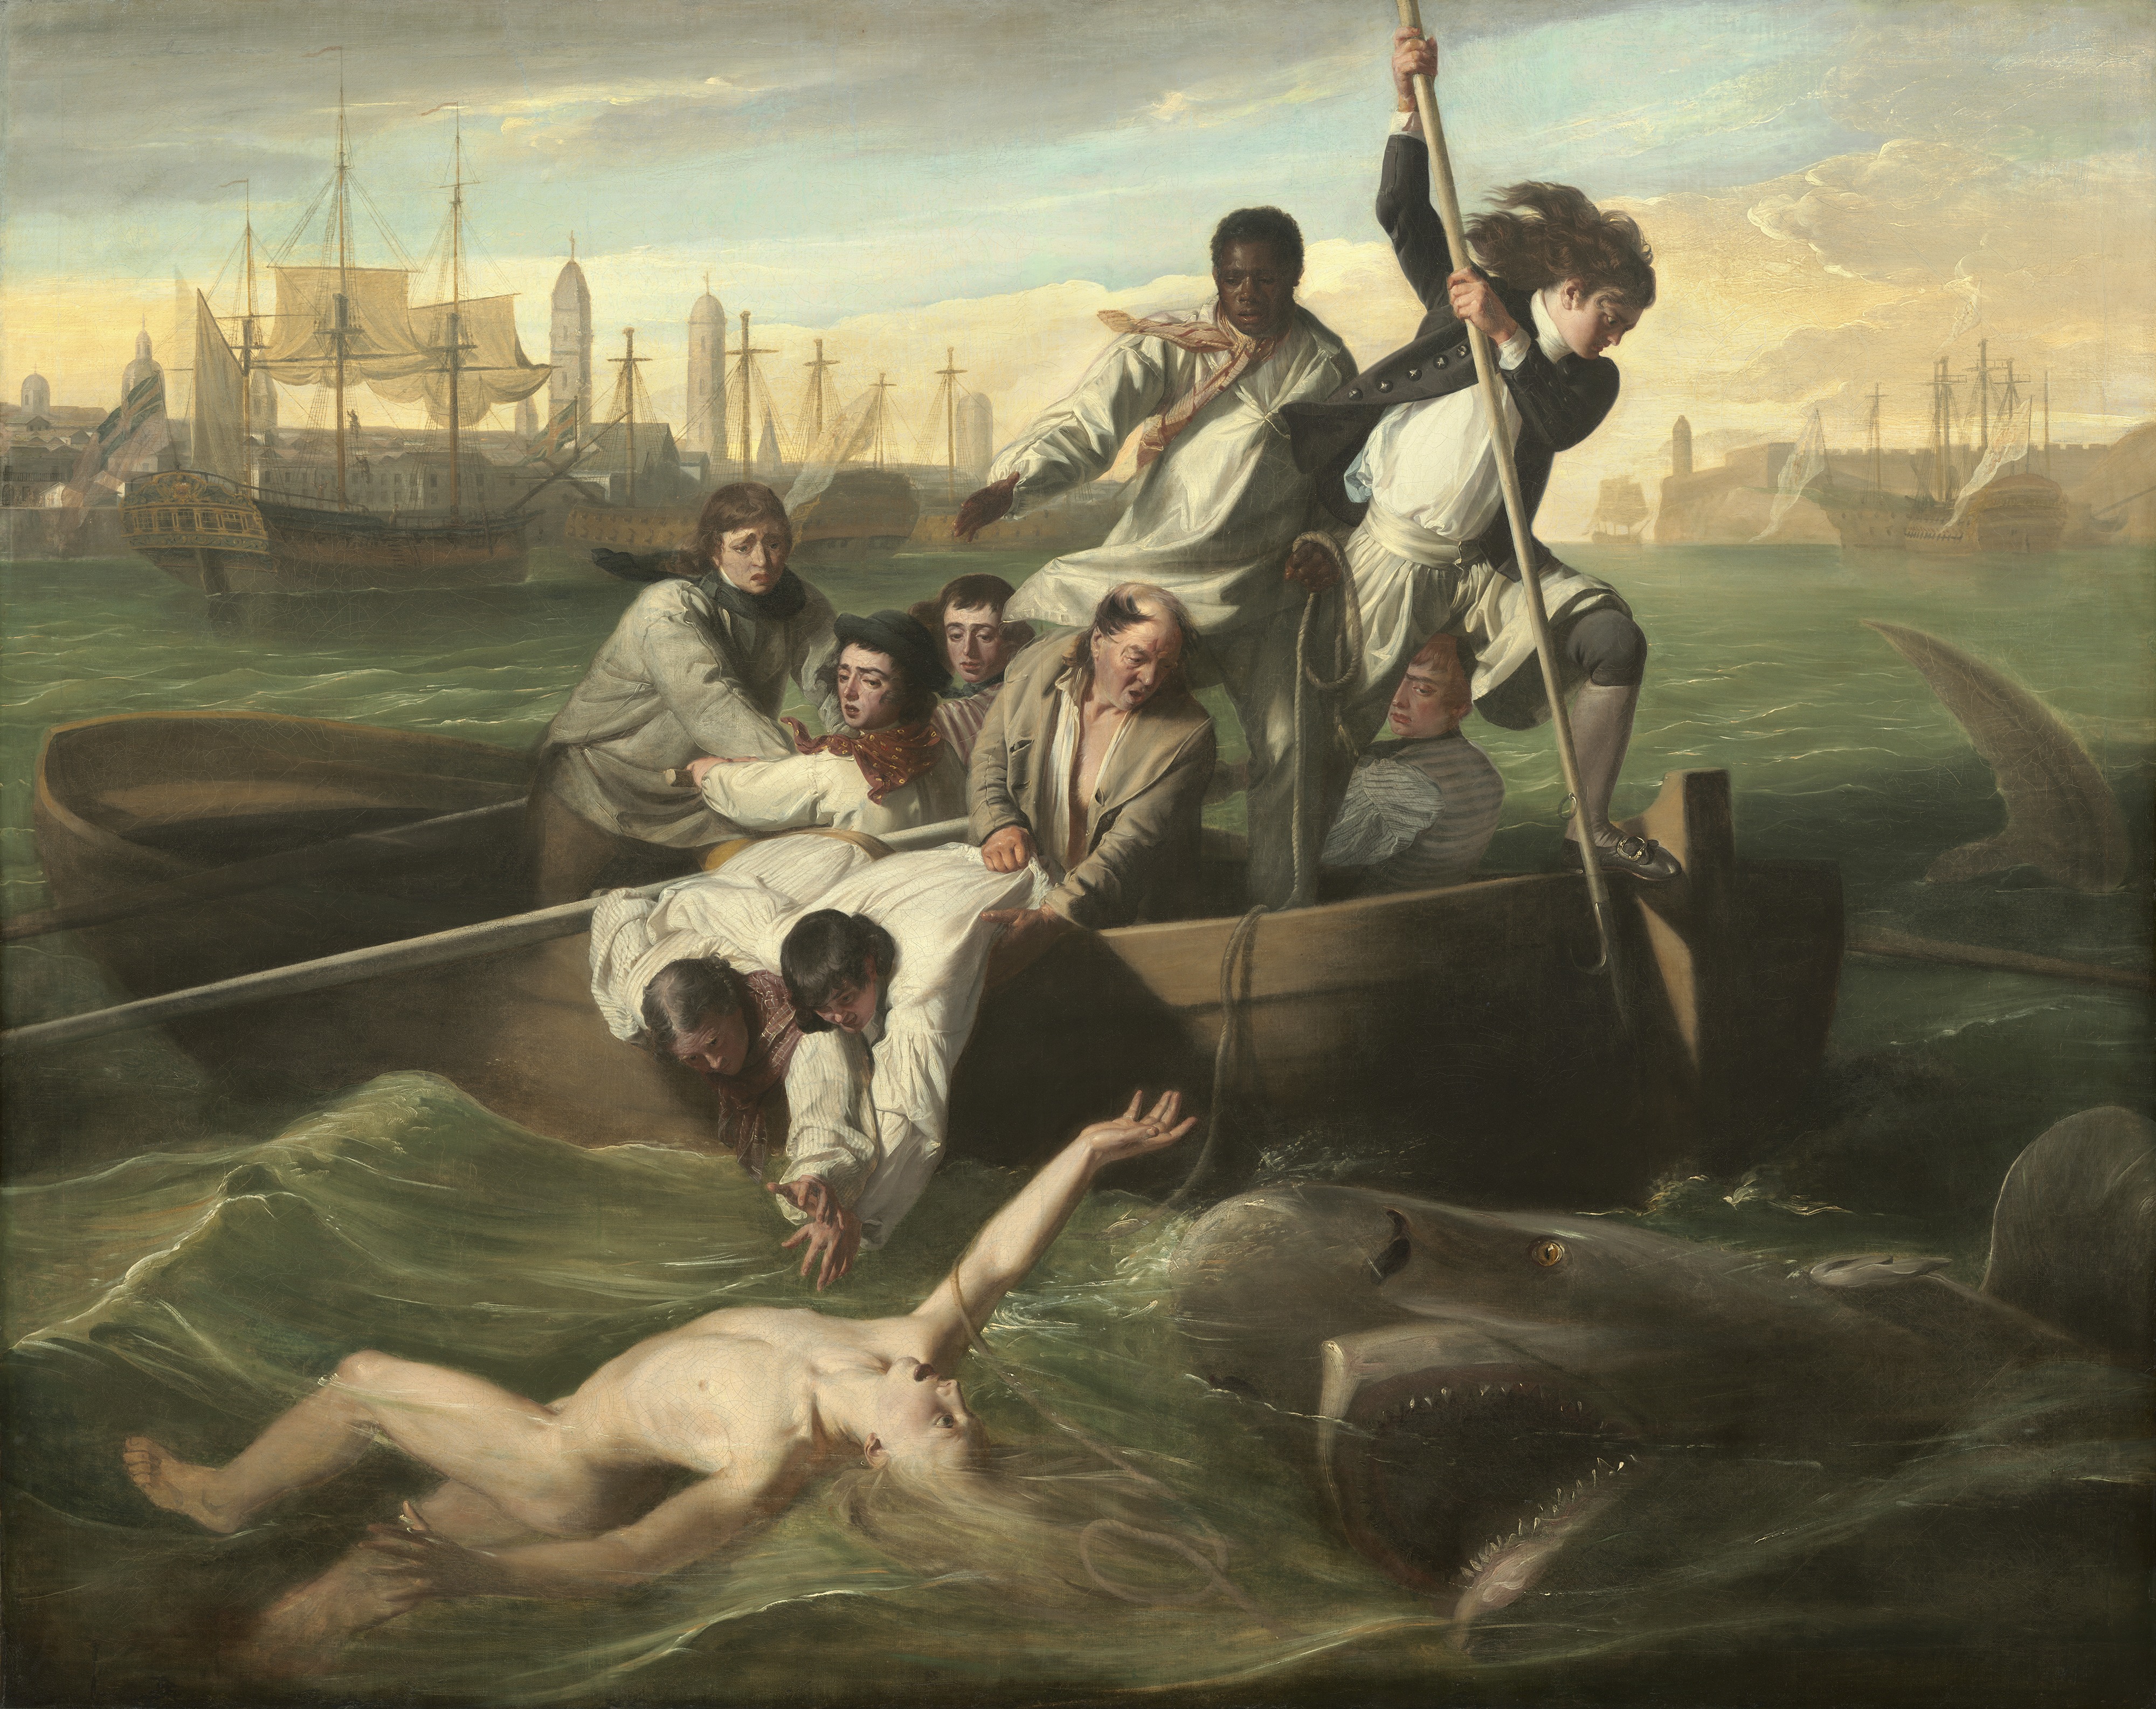 Watson und der Hai by John Singleton Copley - 1778 National Gallery of Art